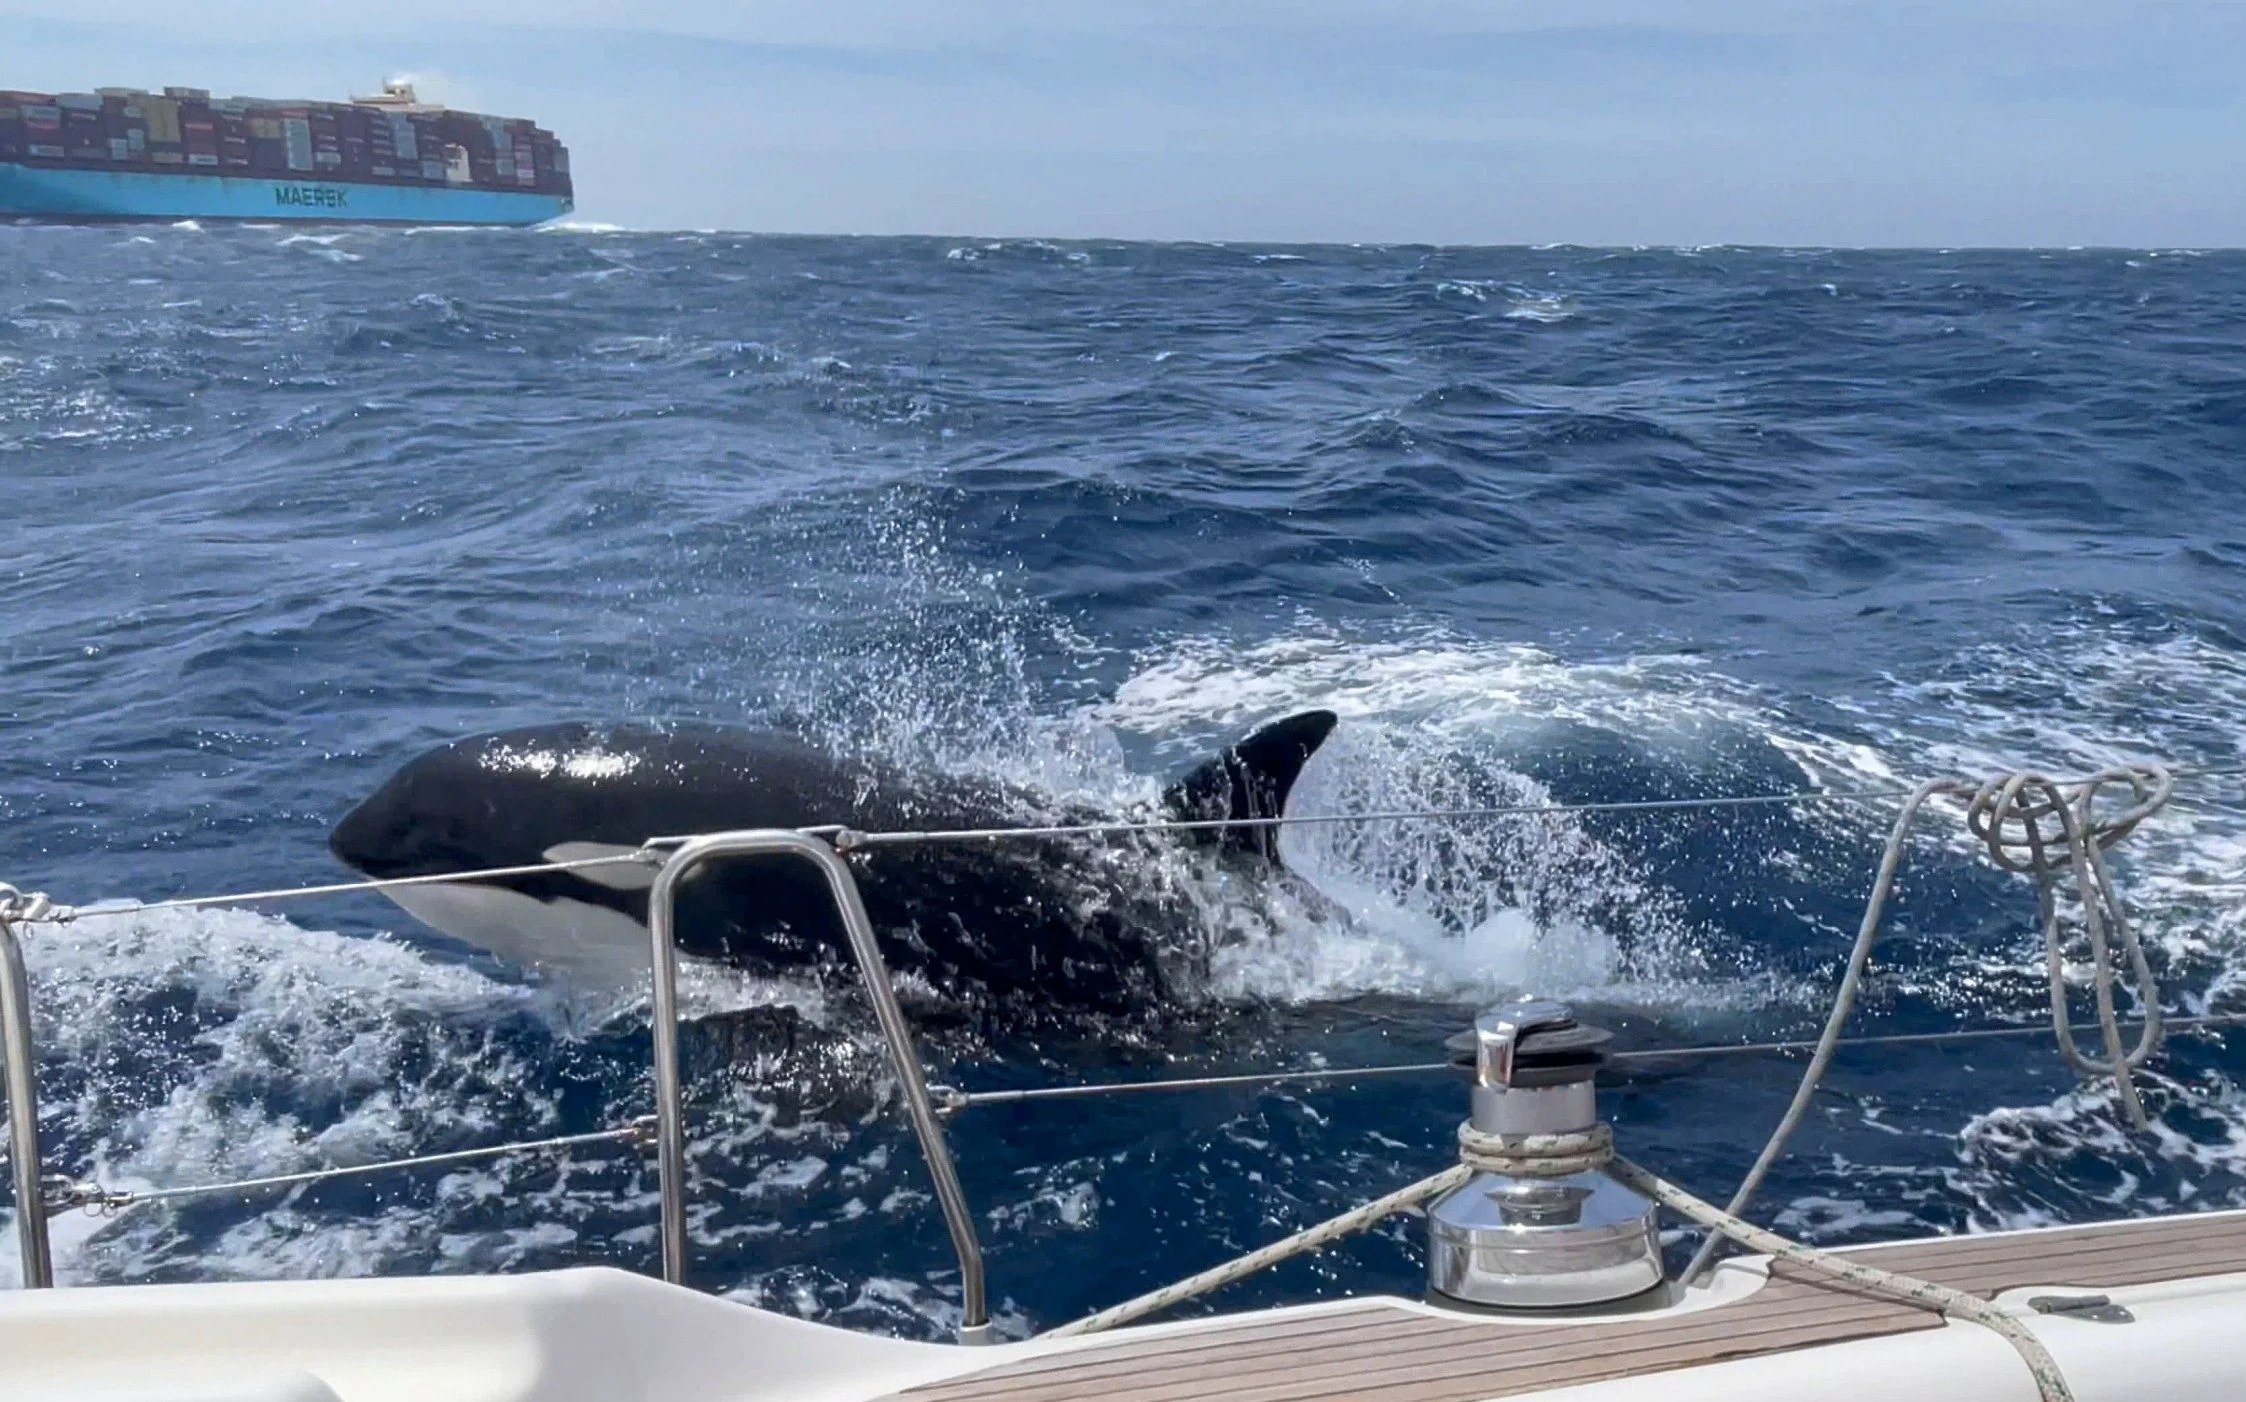 Coordinated Orca Attacks Sunk 3 Boats Off European Coast